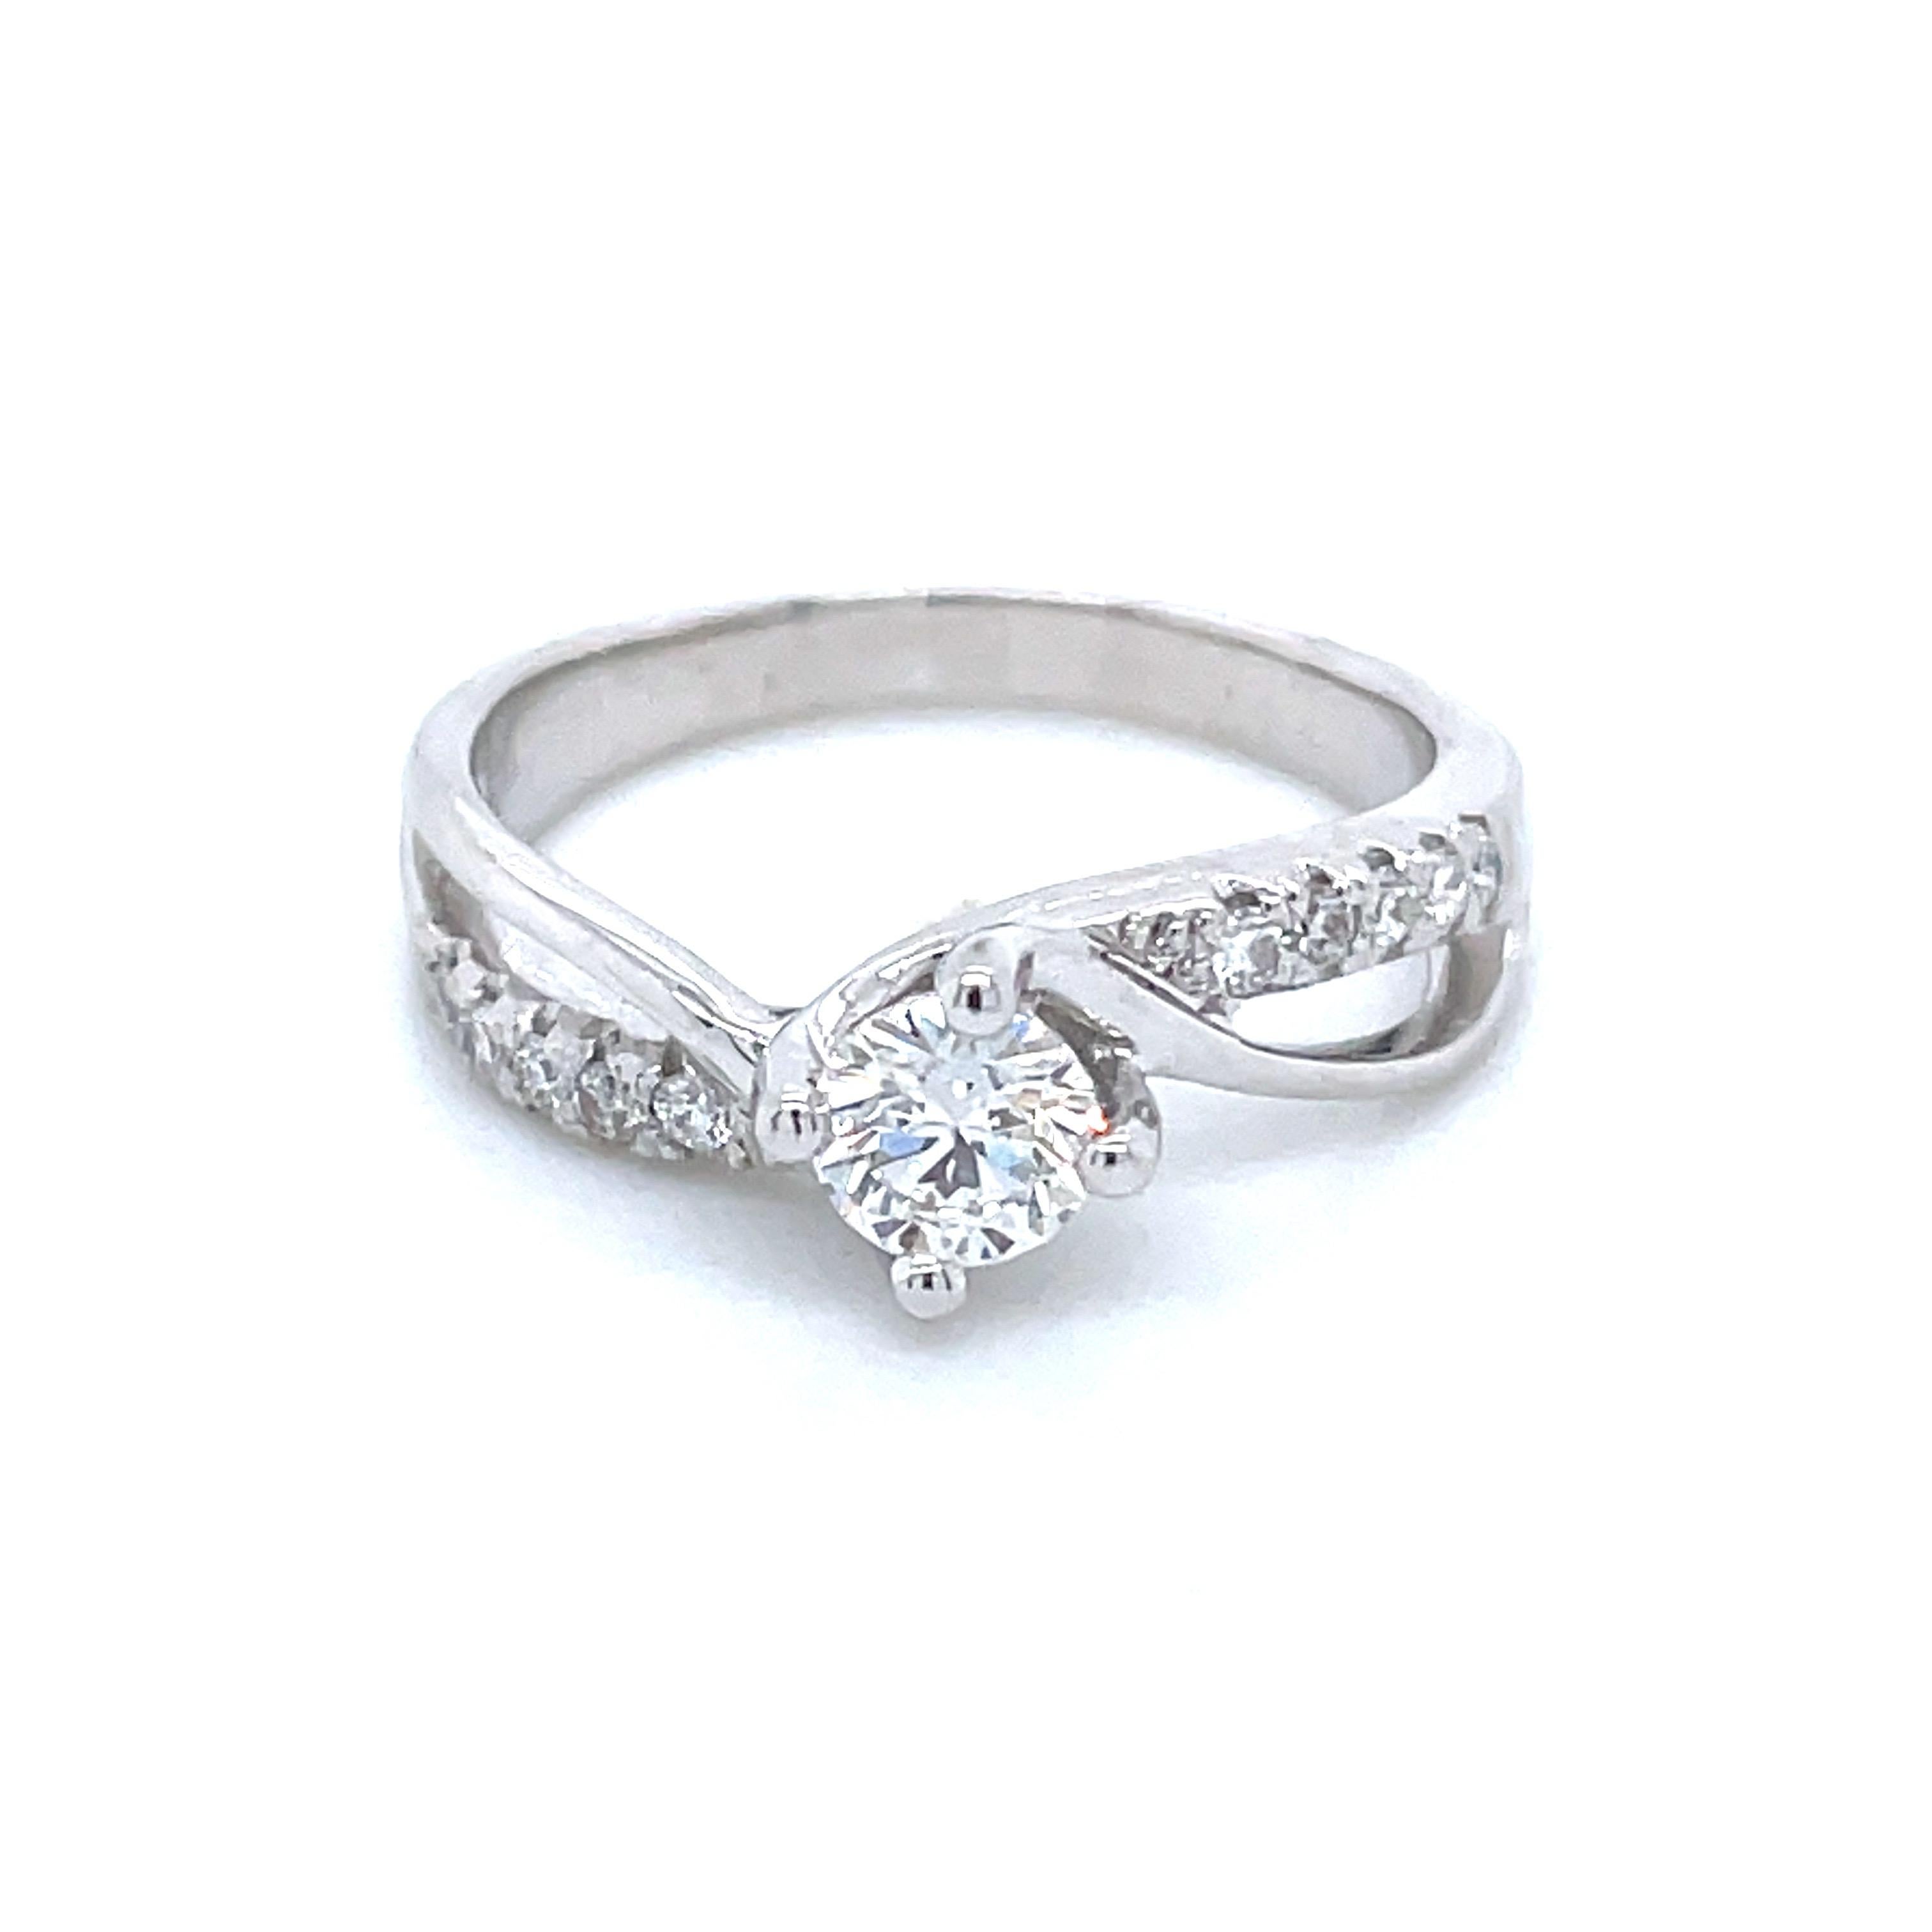 Contemporain Bague de fiançailles torsadée en or blanc 18 carats avec diamants ronds brillants de 0,4 carat en vente